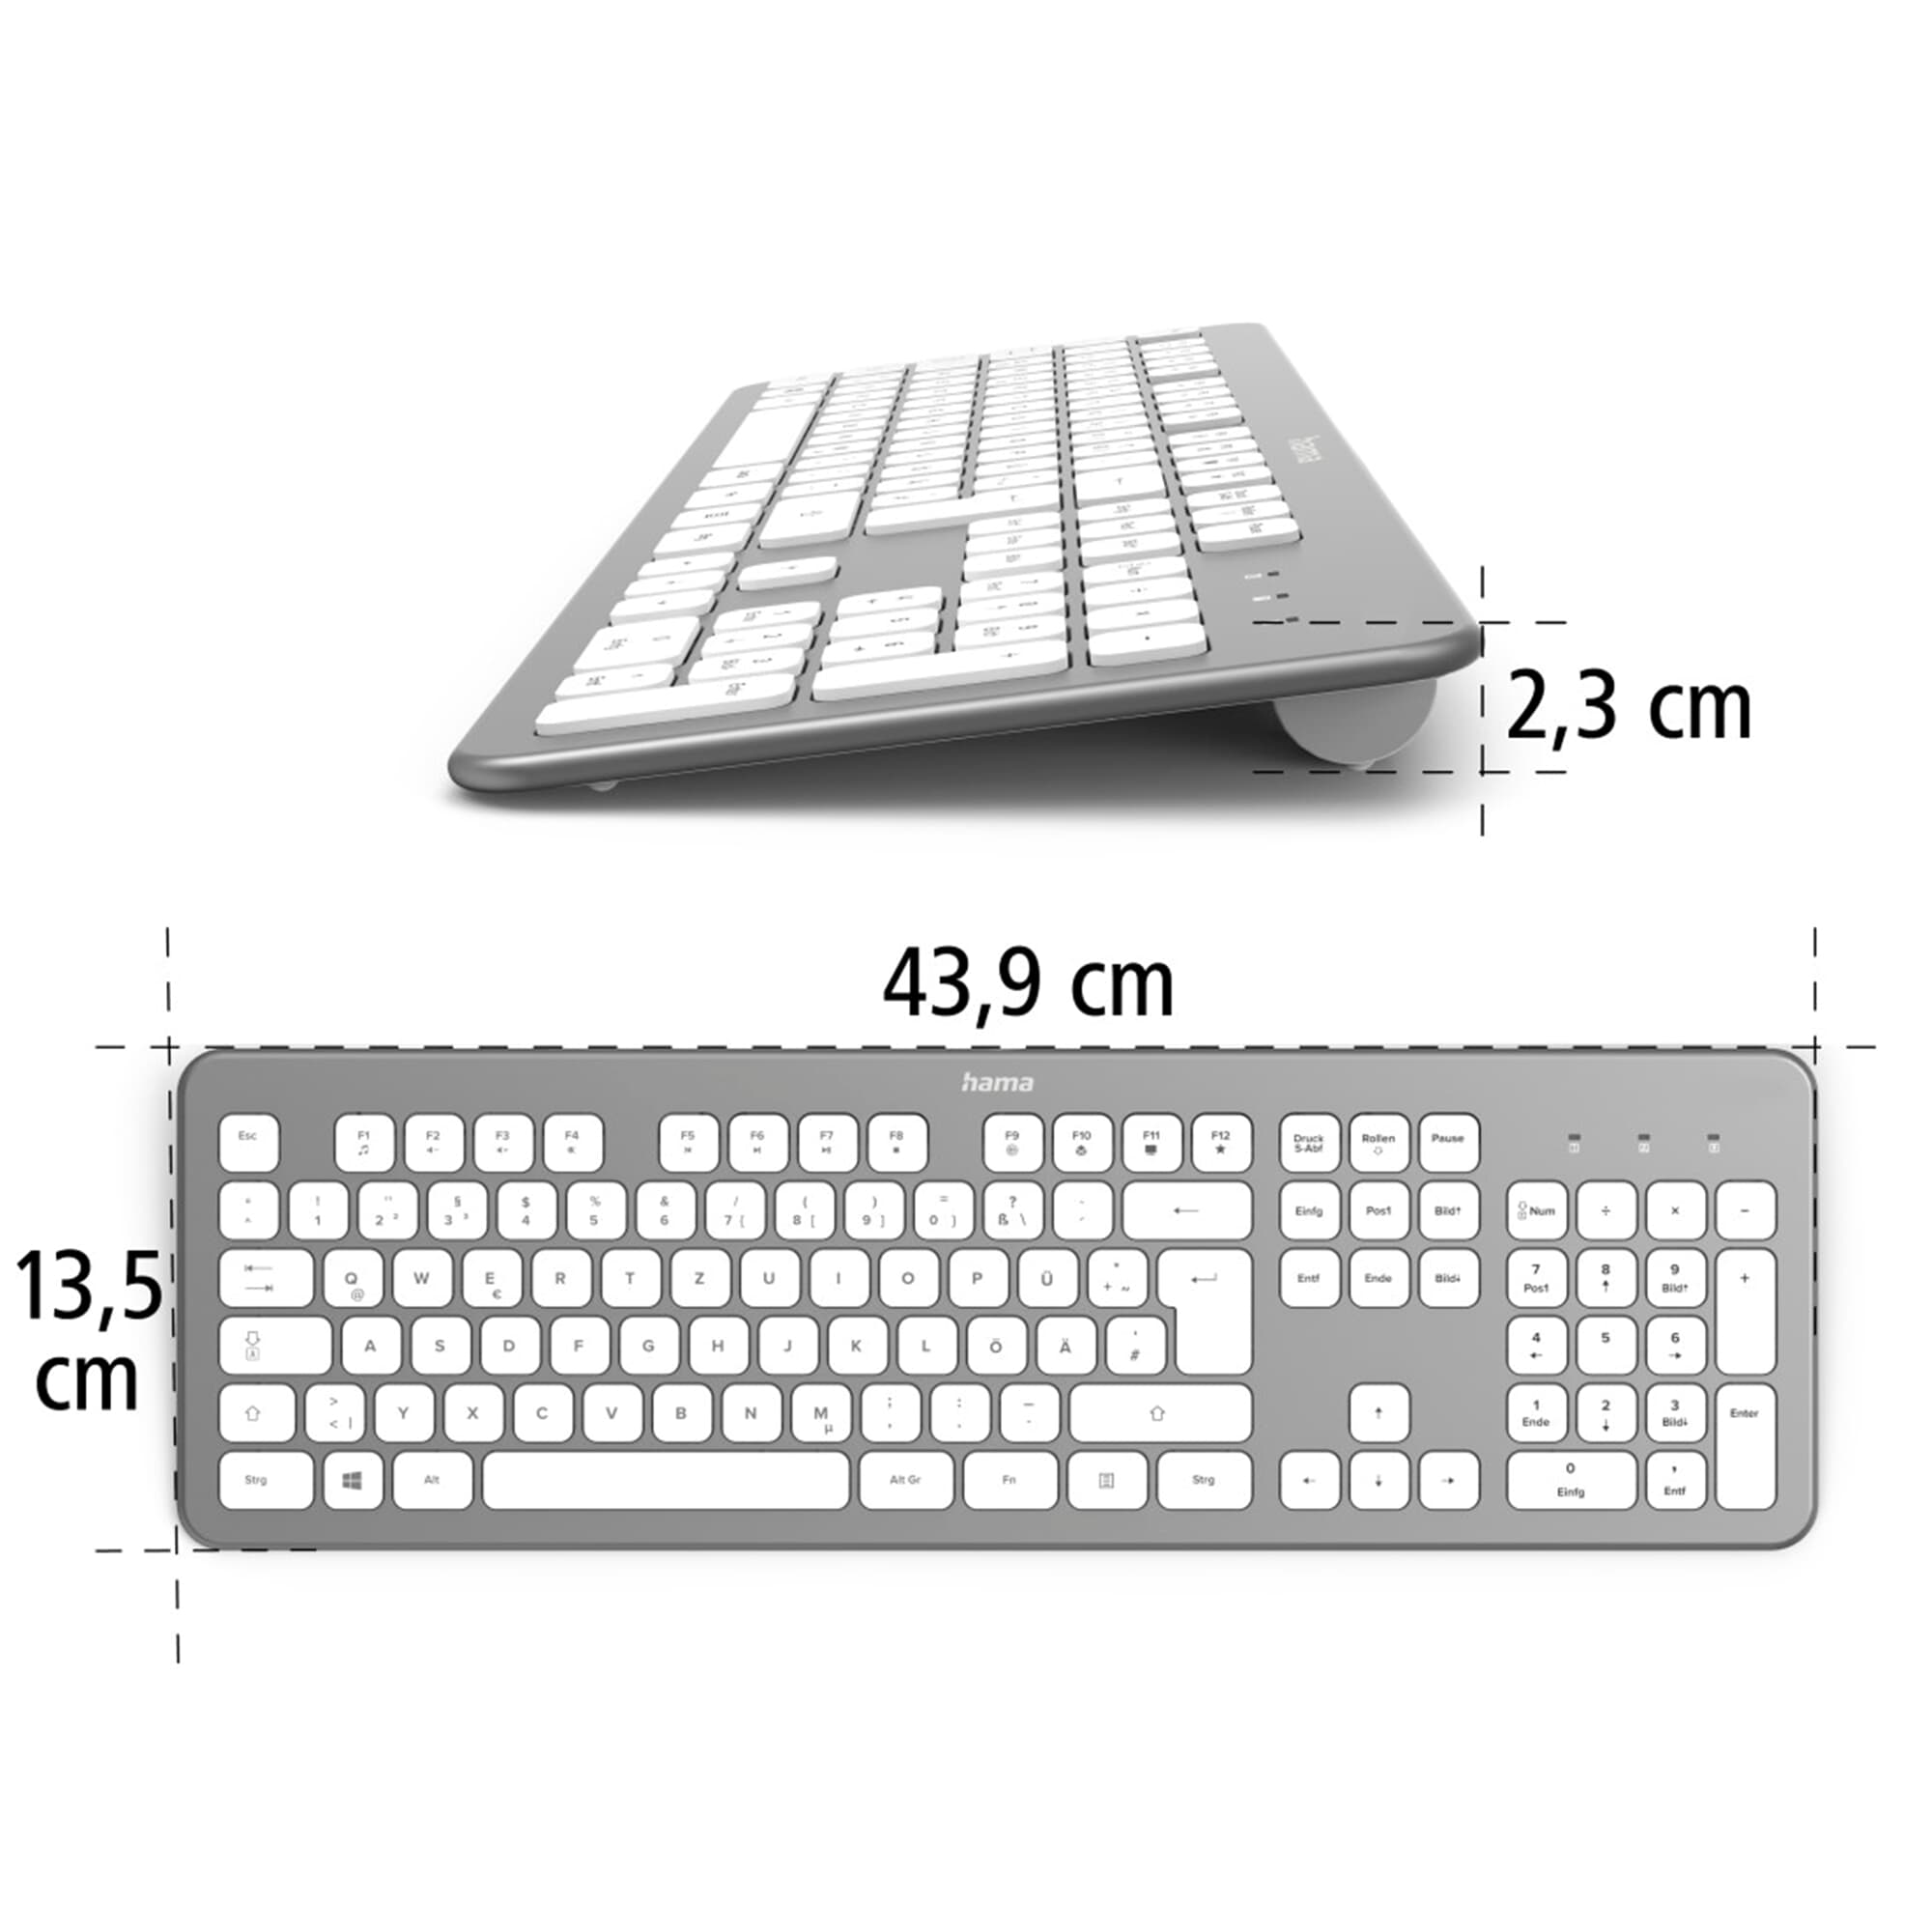 Tastatur, Rubberdome KW-700, HAMA